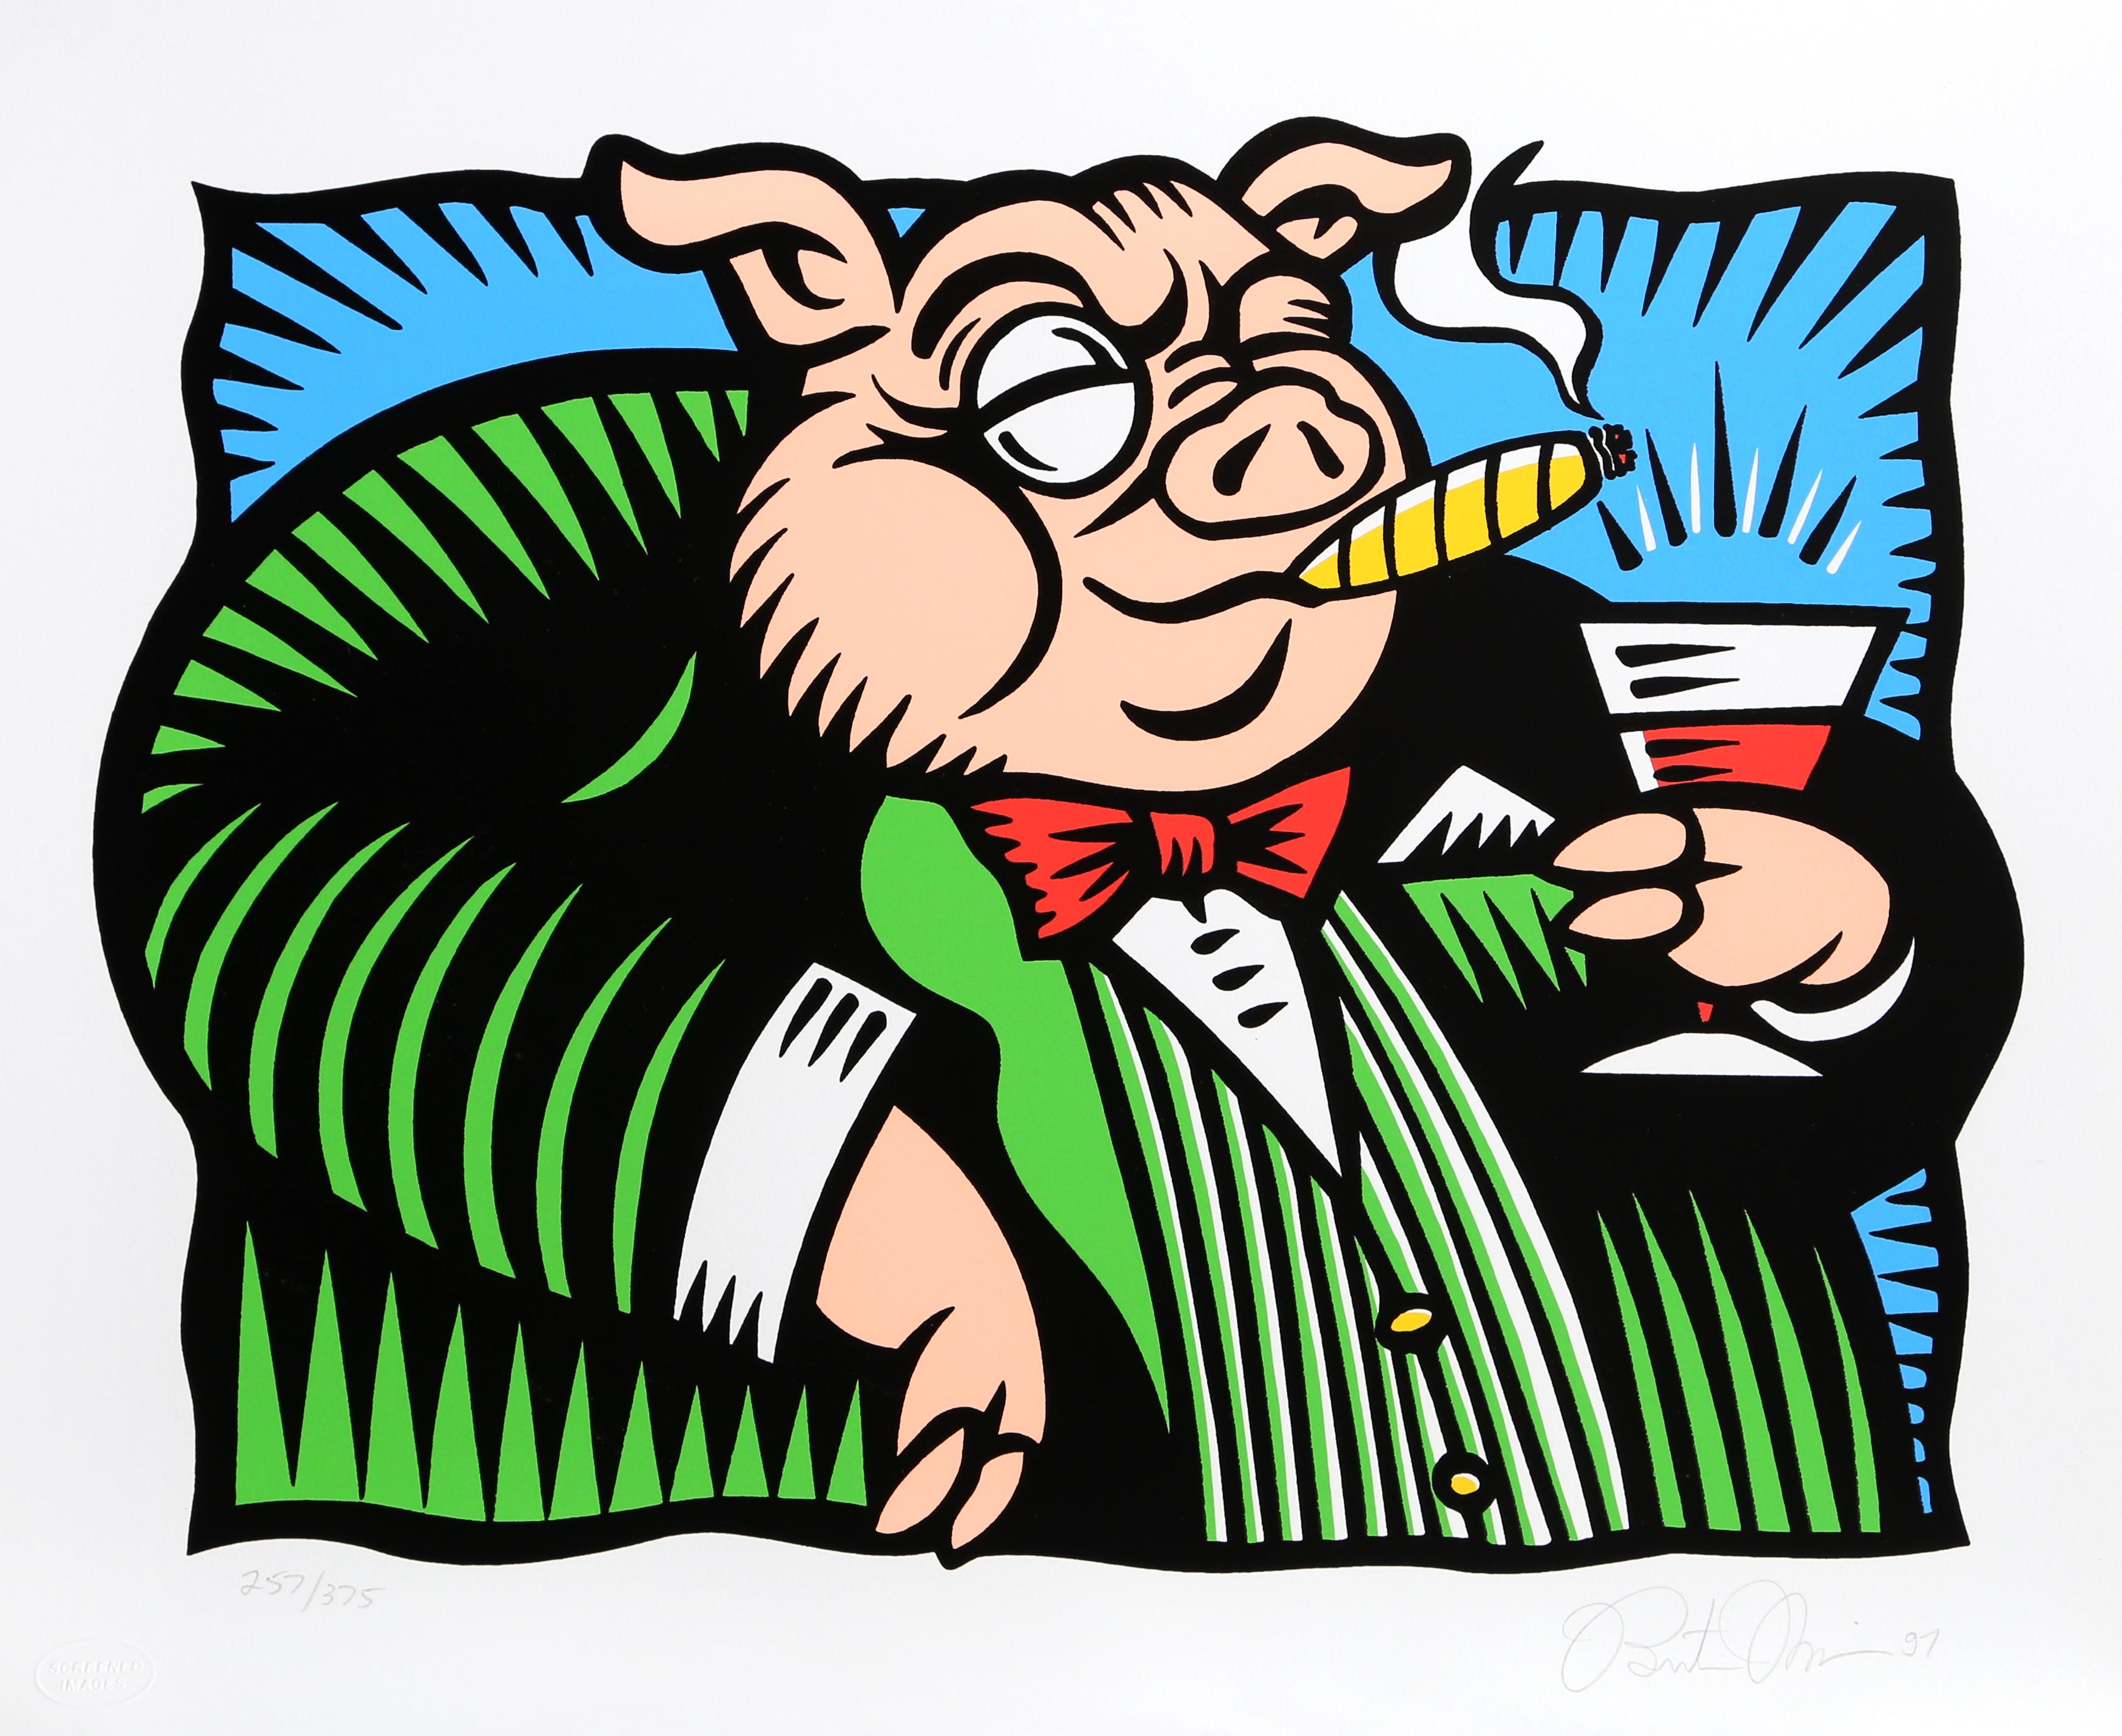 Burton Morris - "The Pig", Pop Art Serigraph by Burton Morris For Sale at 1stDibs burton morris art, pop art pig